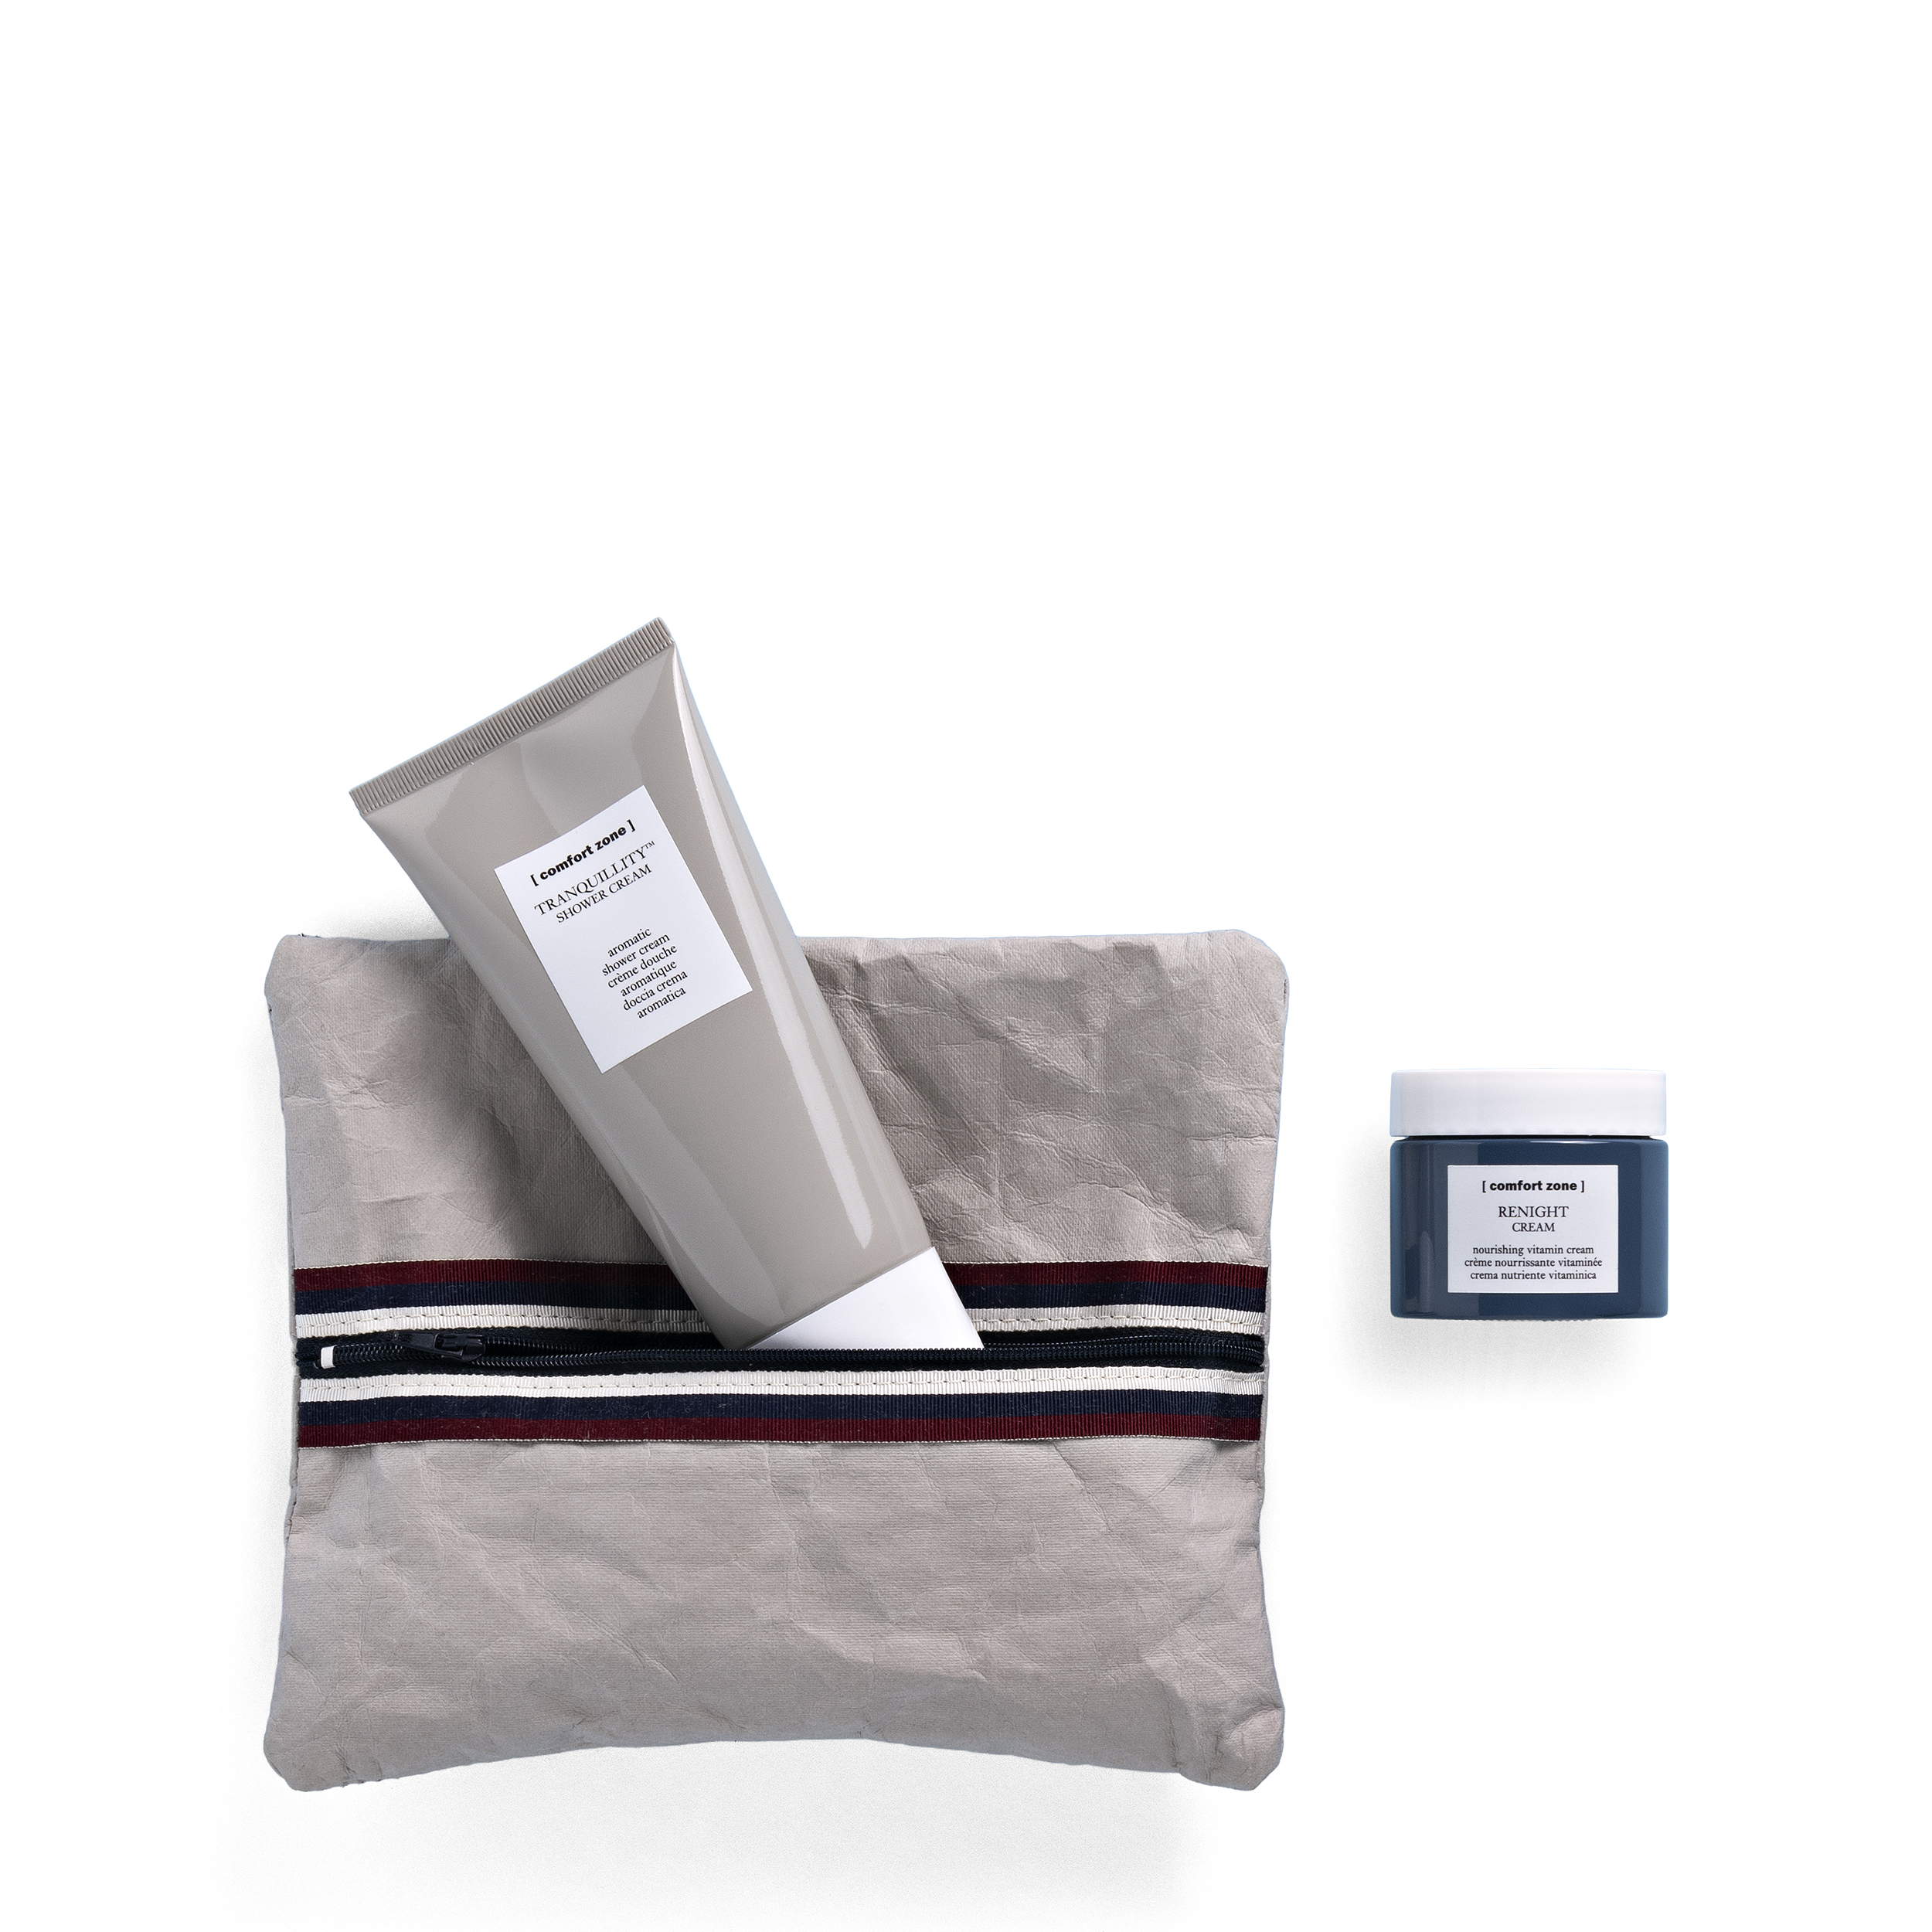 Comfort Zone Comfort Zone Подарочный набор для очищения и питания кожи Love Your Skin Gift Set от Foambox